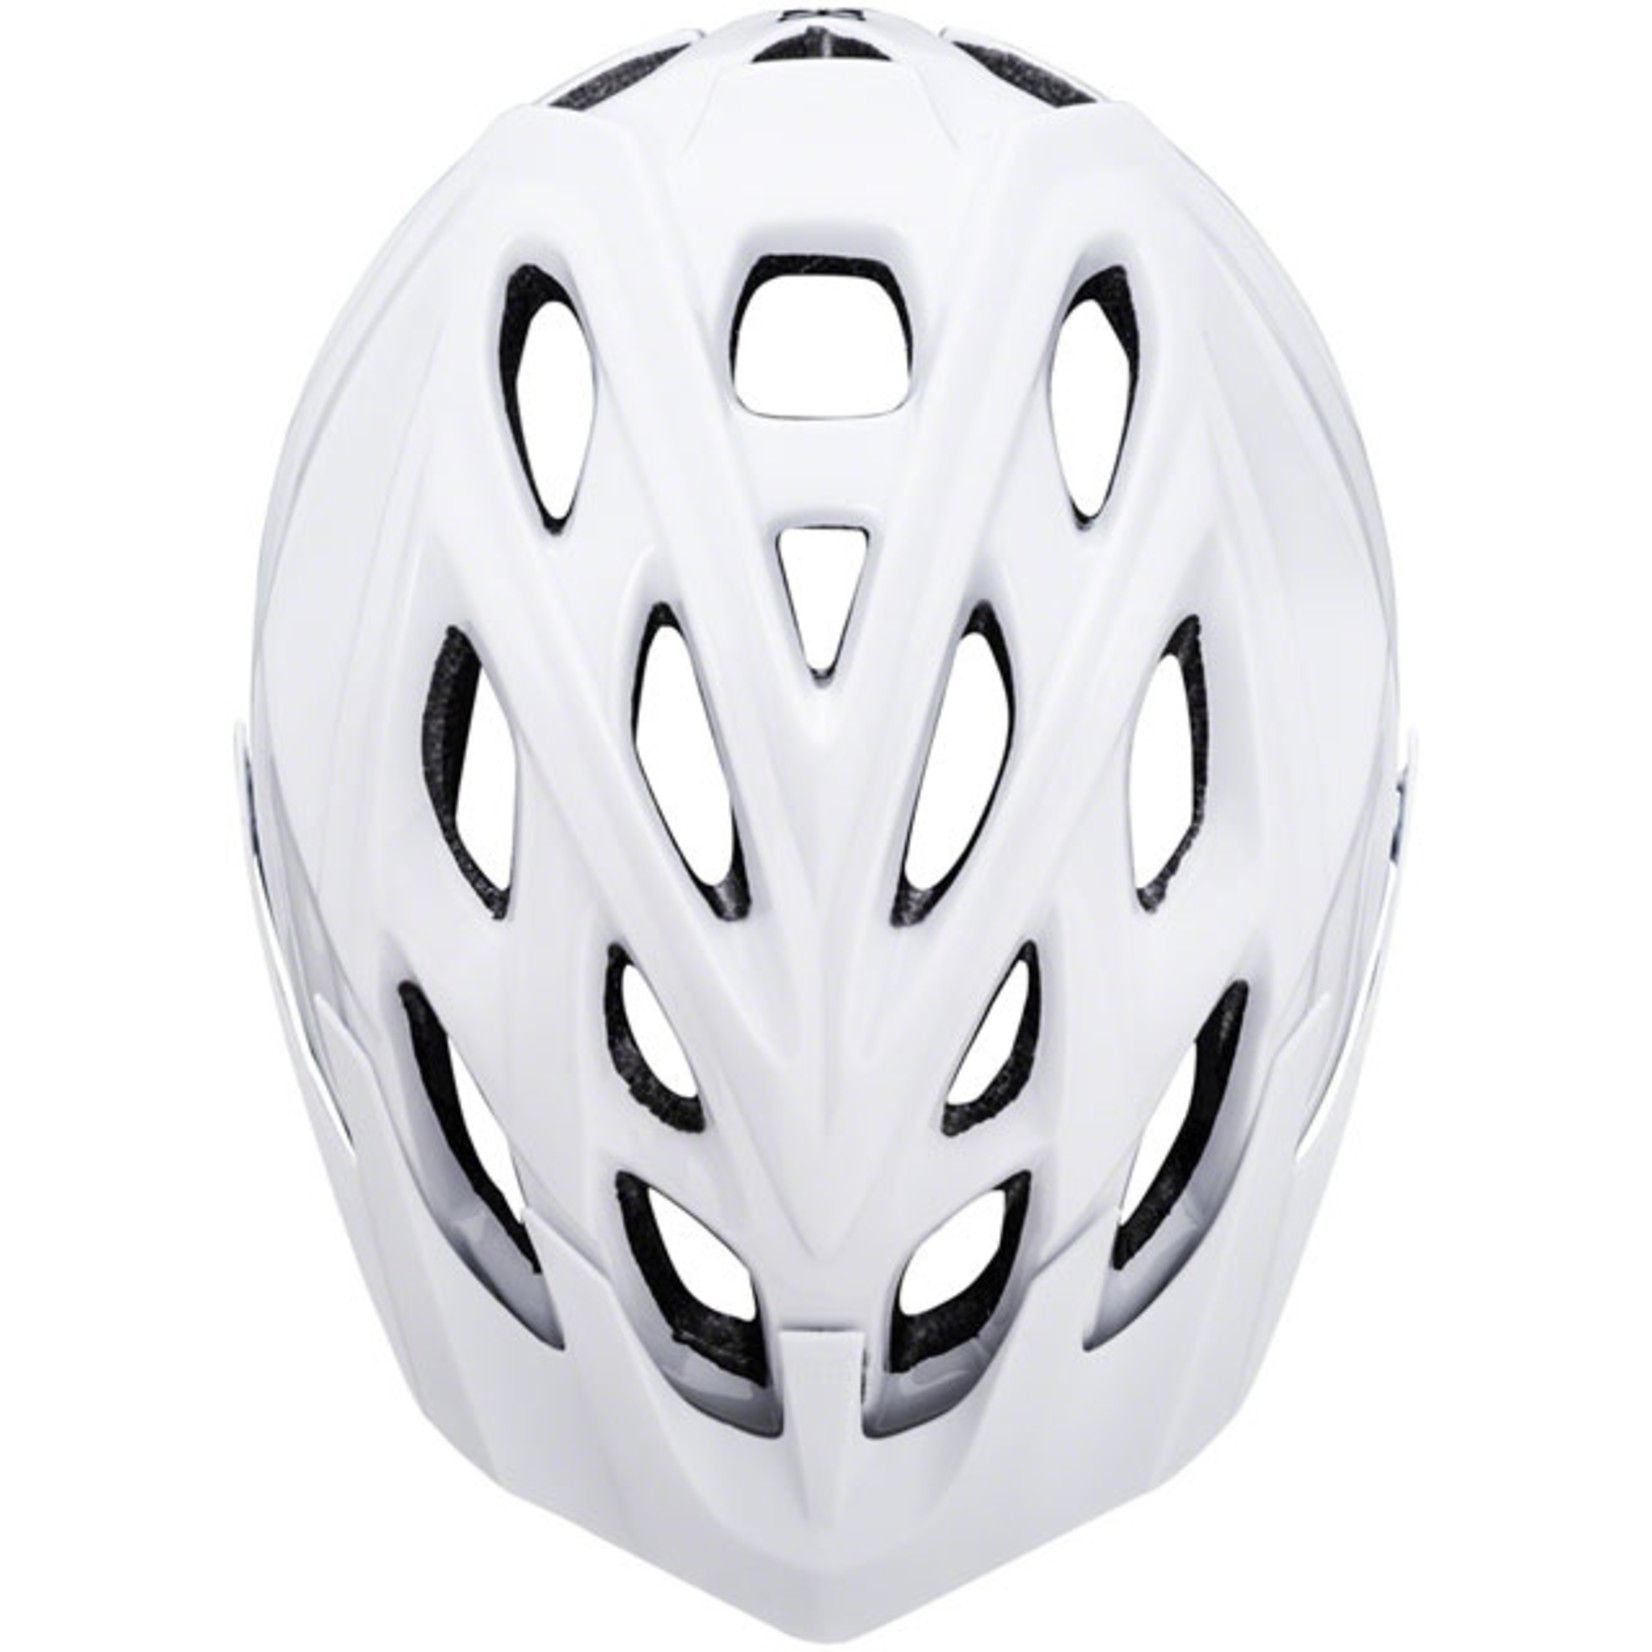 Kali Protectives Kali Protectives Chakra Solo Helmet - Solid White Small/Medium